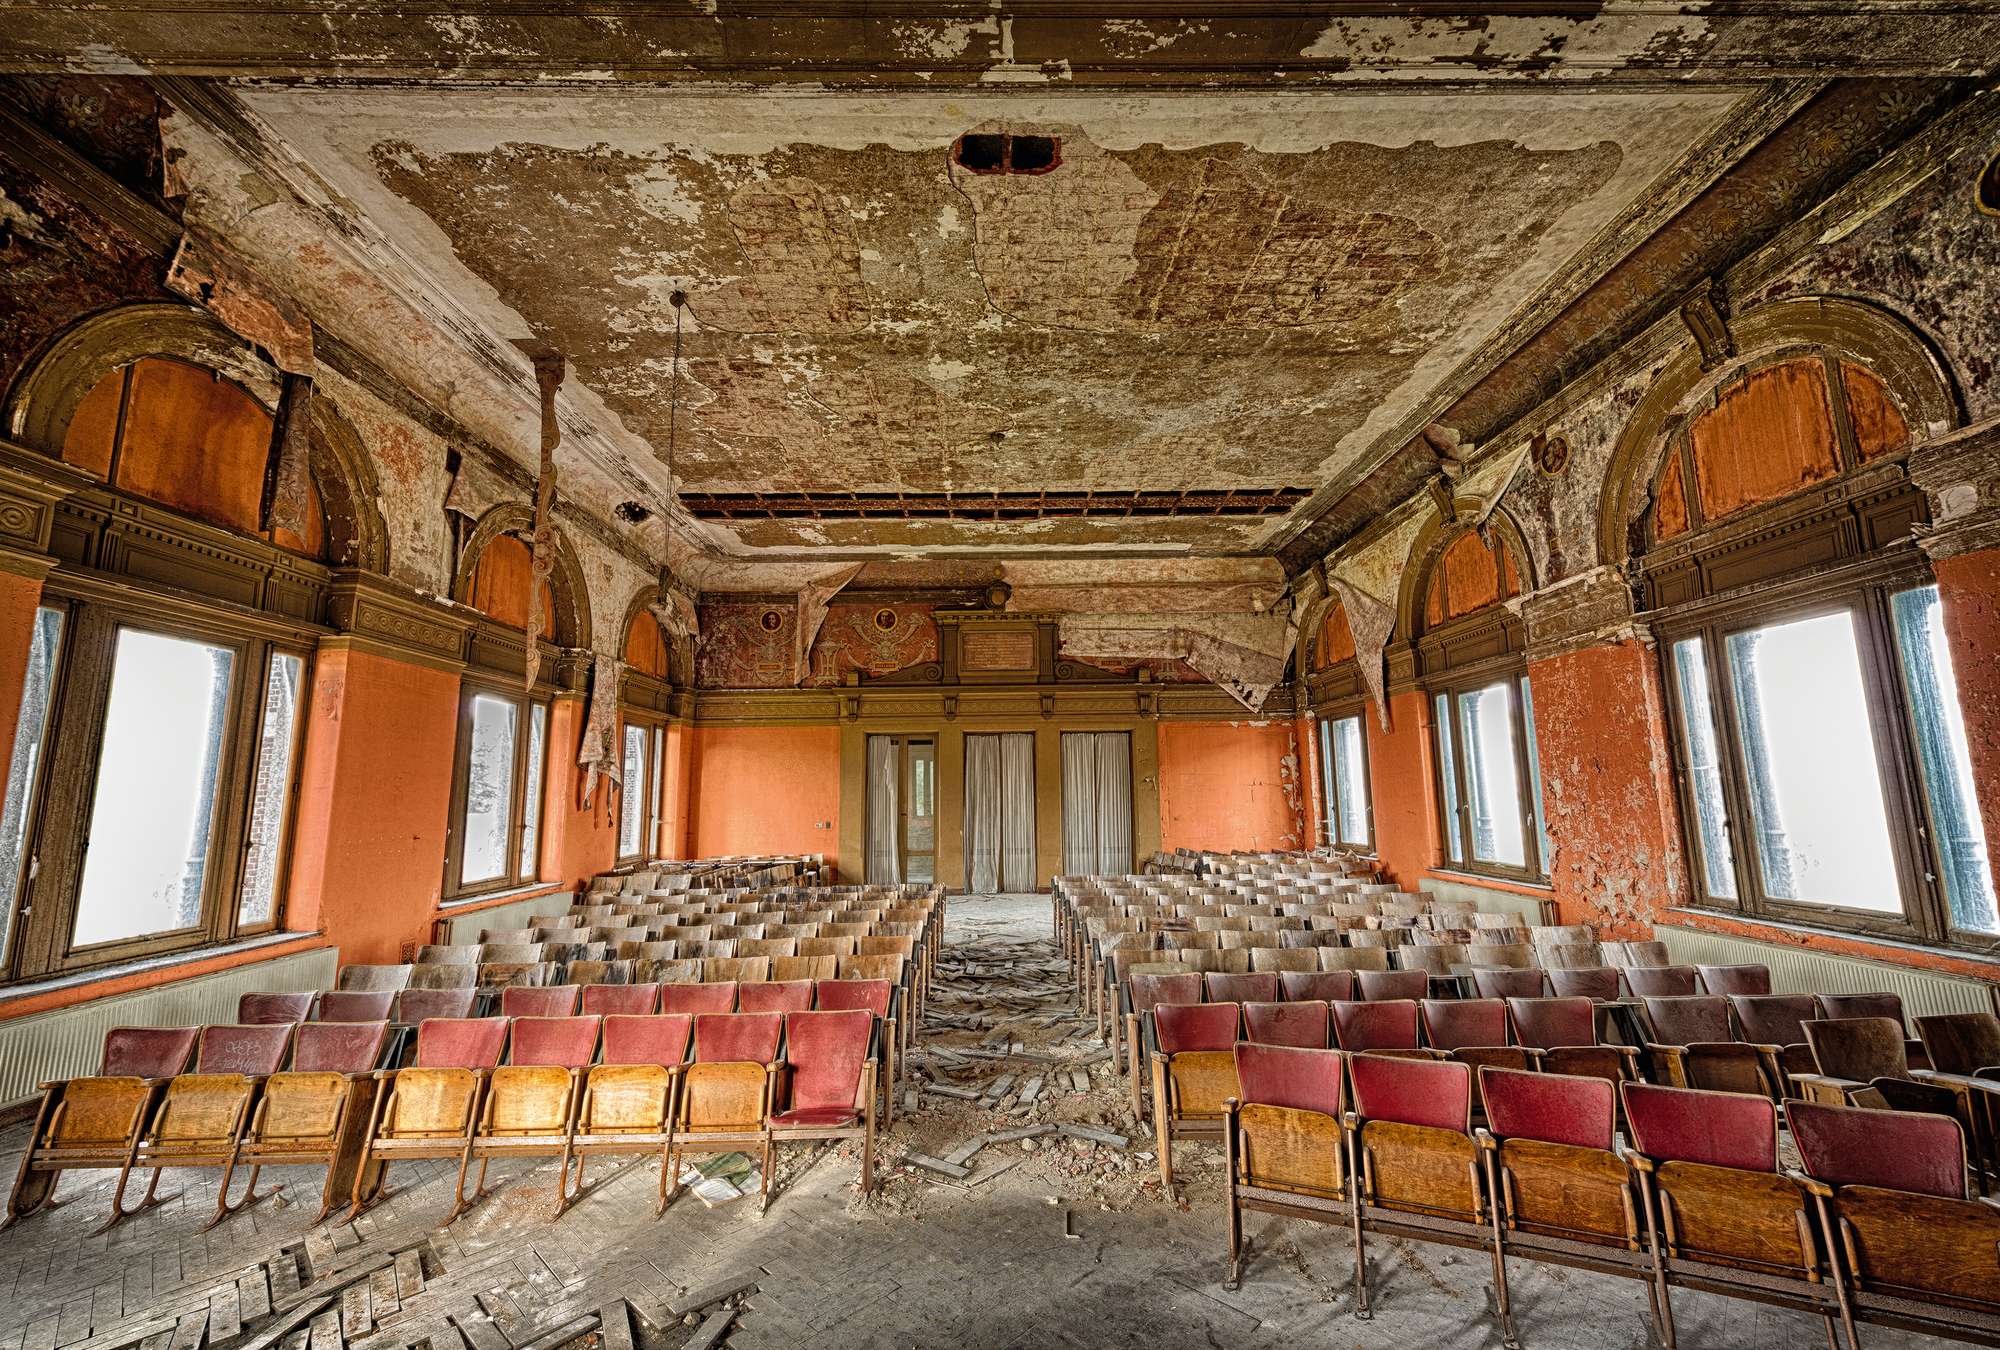             Fotomurali Teatro abbandonato
        